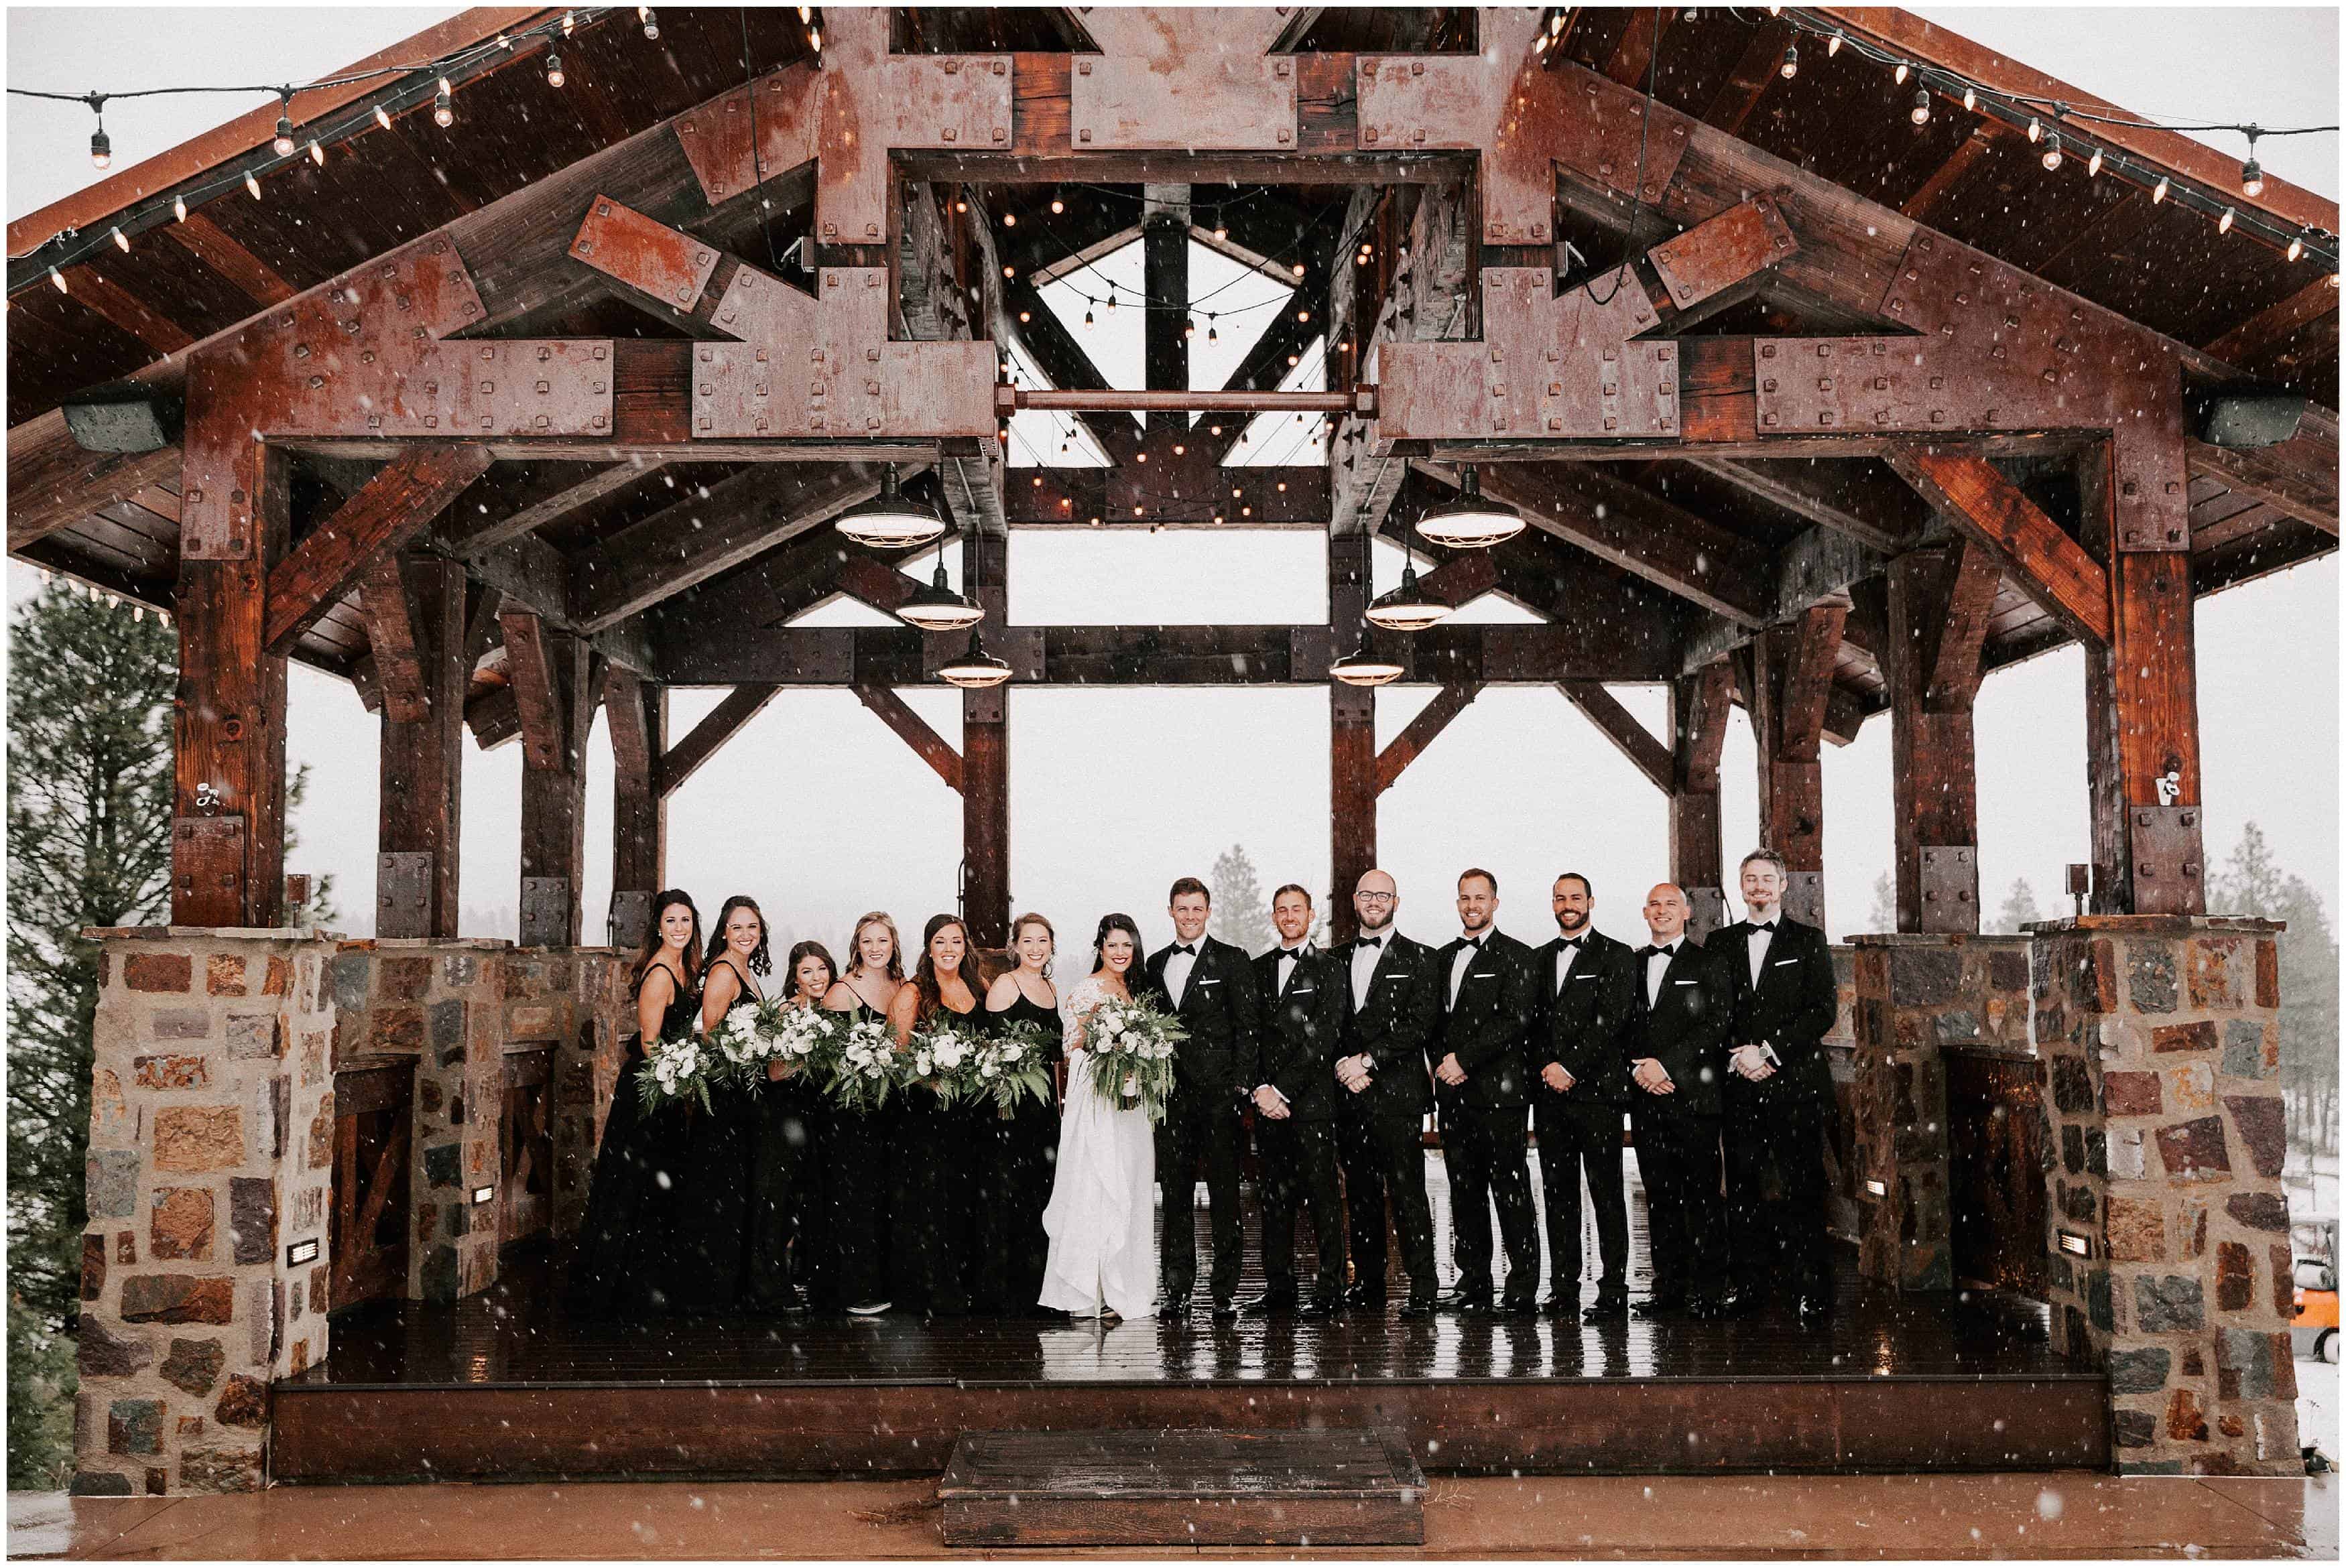 Swiftwater Cellars wedding photos in winter by Kyle Goldie of Luma Weddings